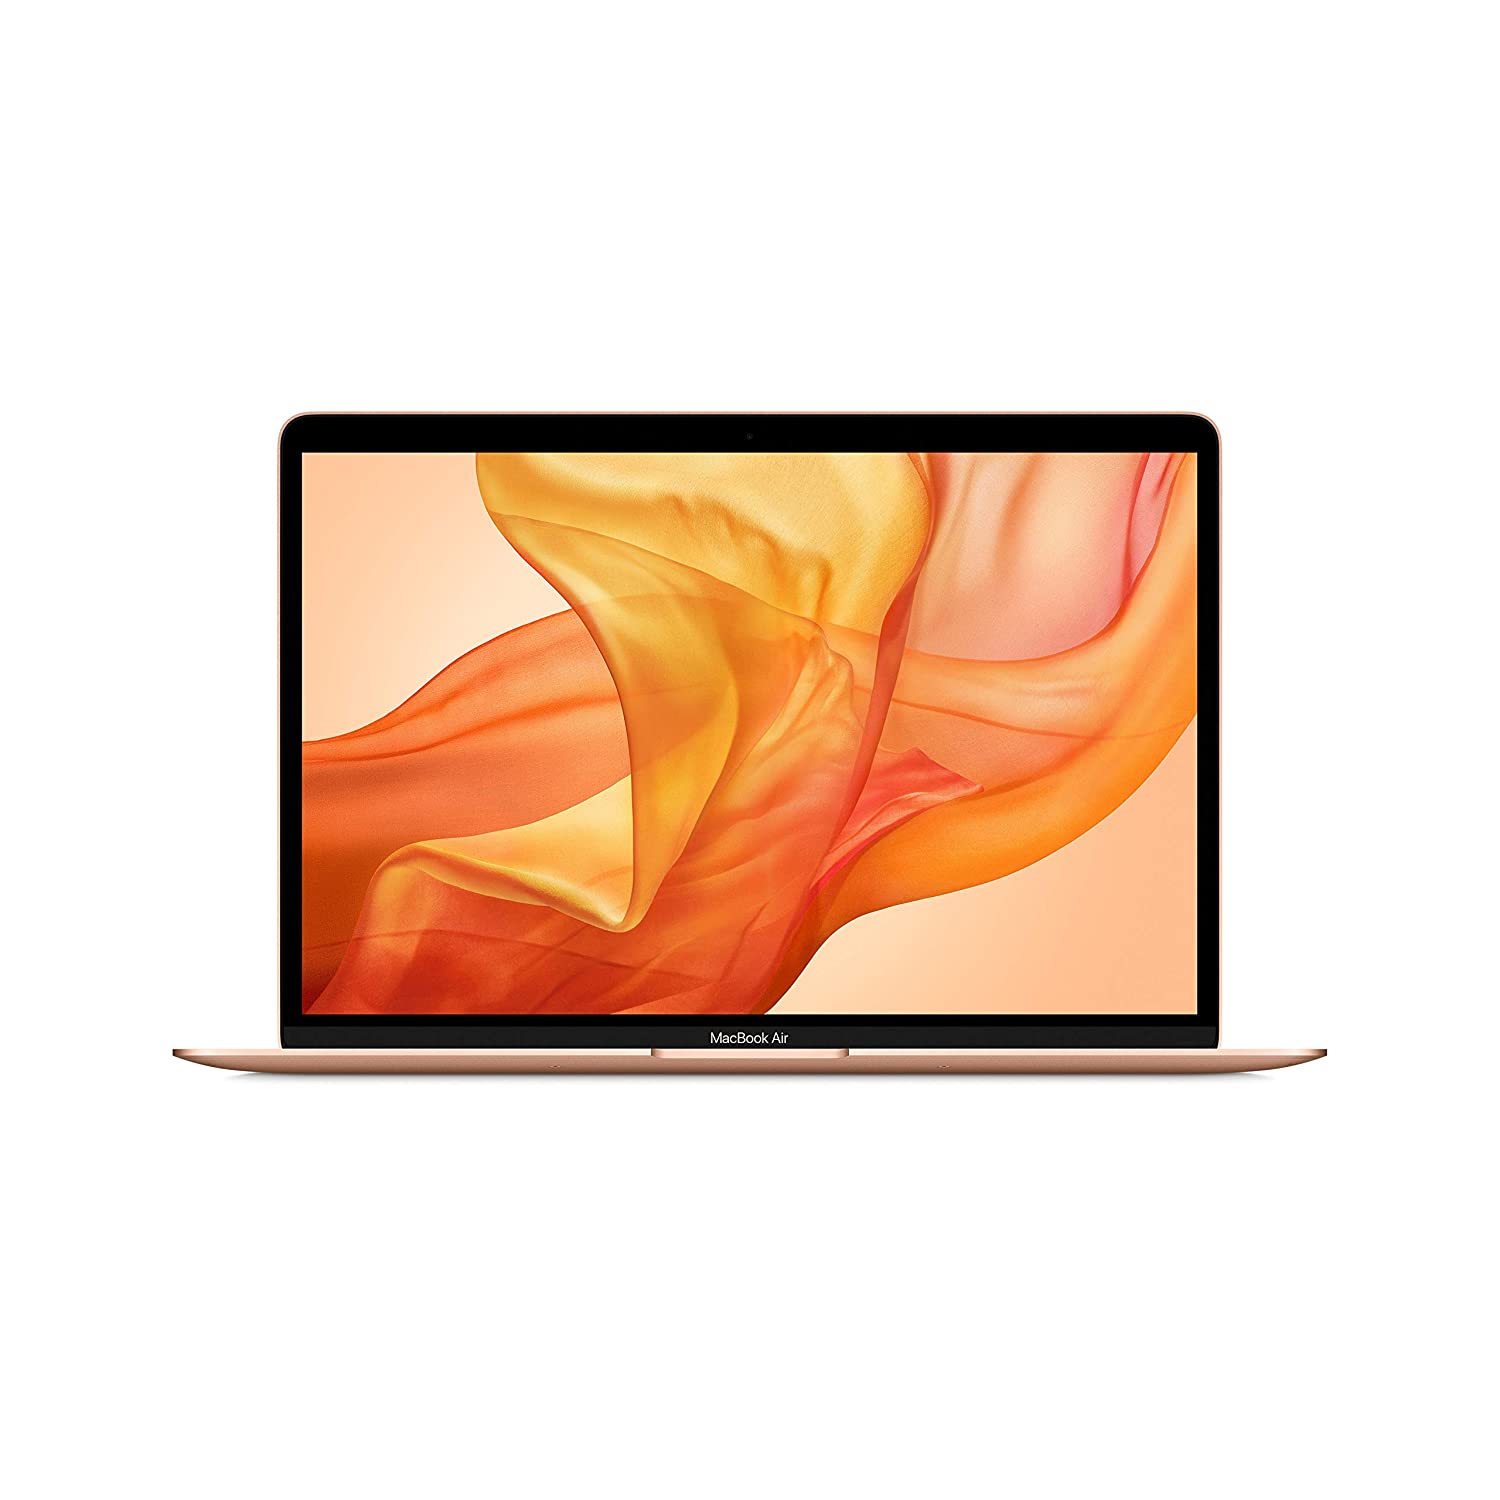 Apple MacBook Air (13-inch, 1.1GHz Dual-core 10th-Generation Intel Core i3 Processor, 8GB RAM, 256GB Storage) - Gold